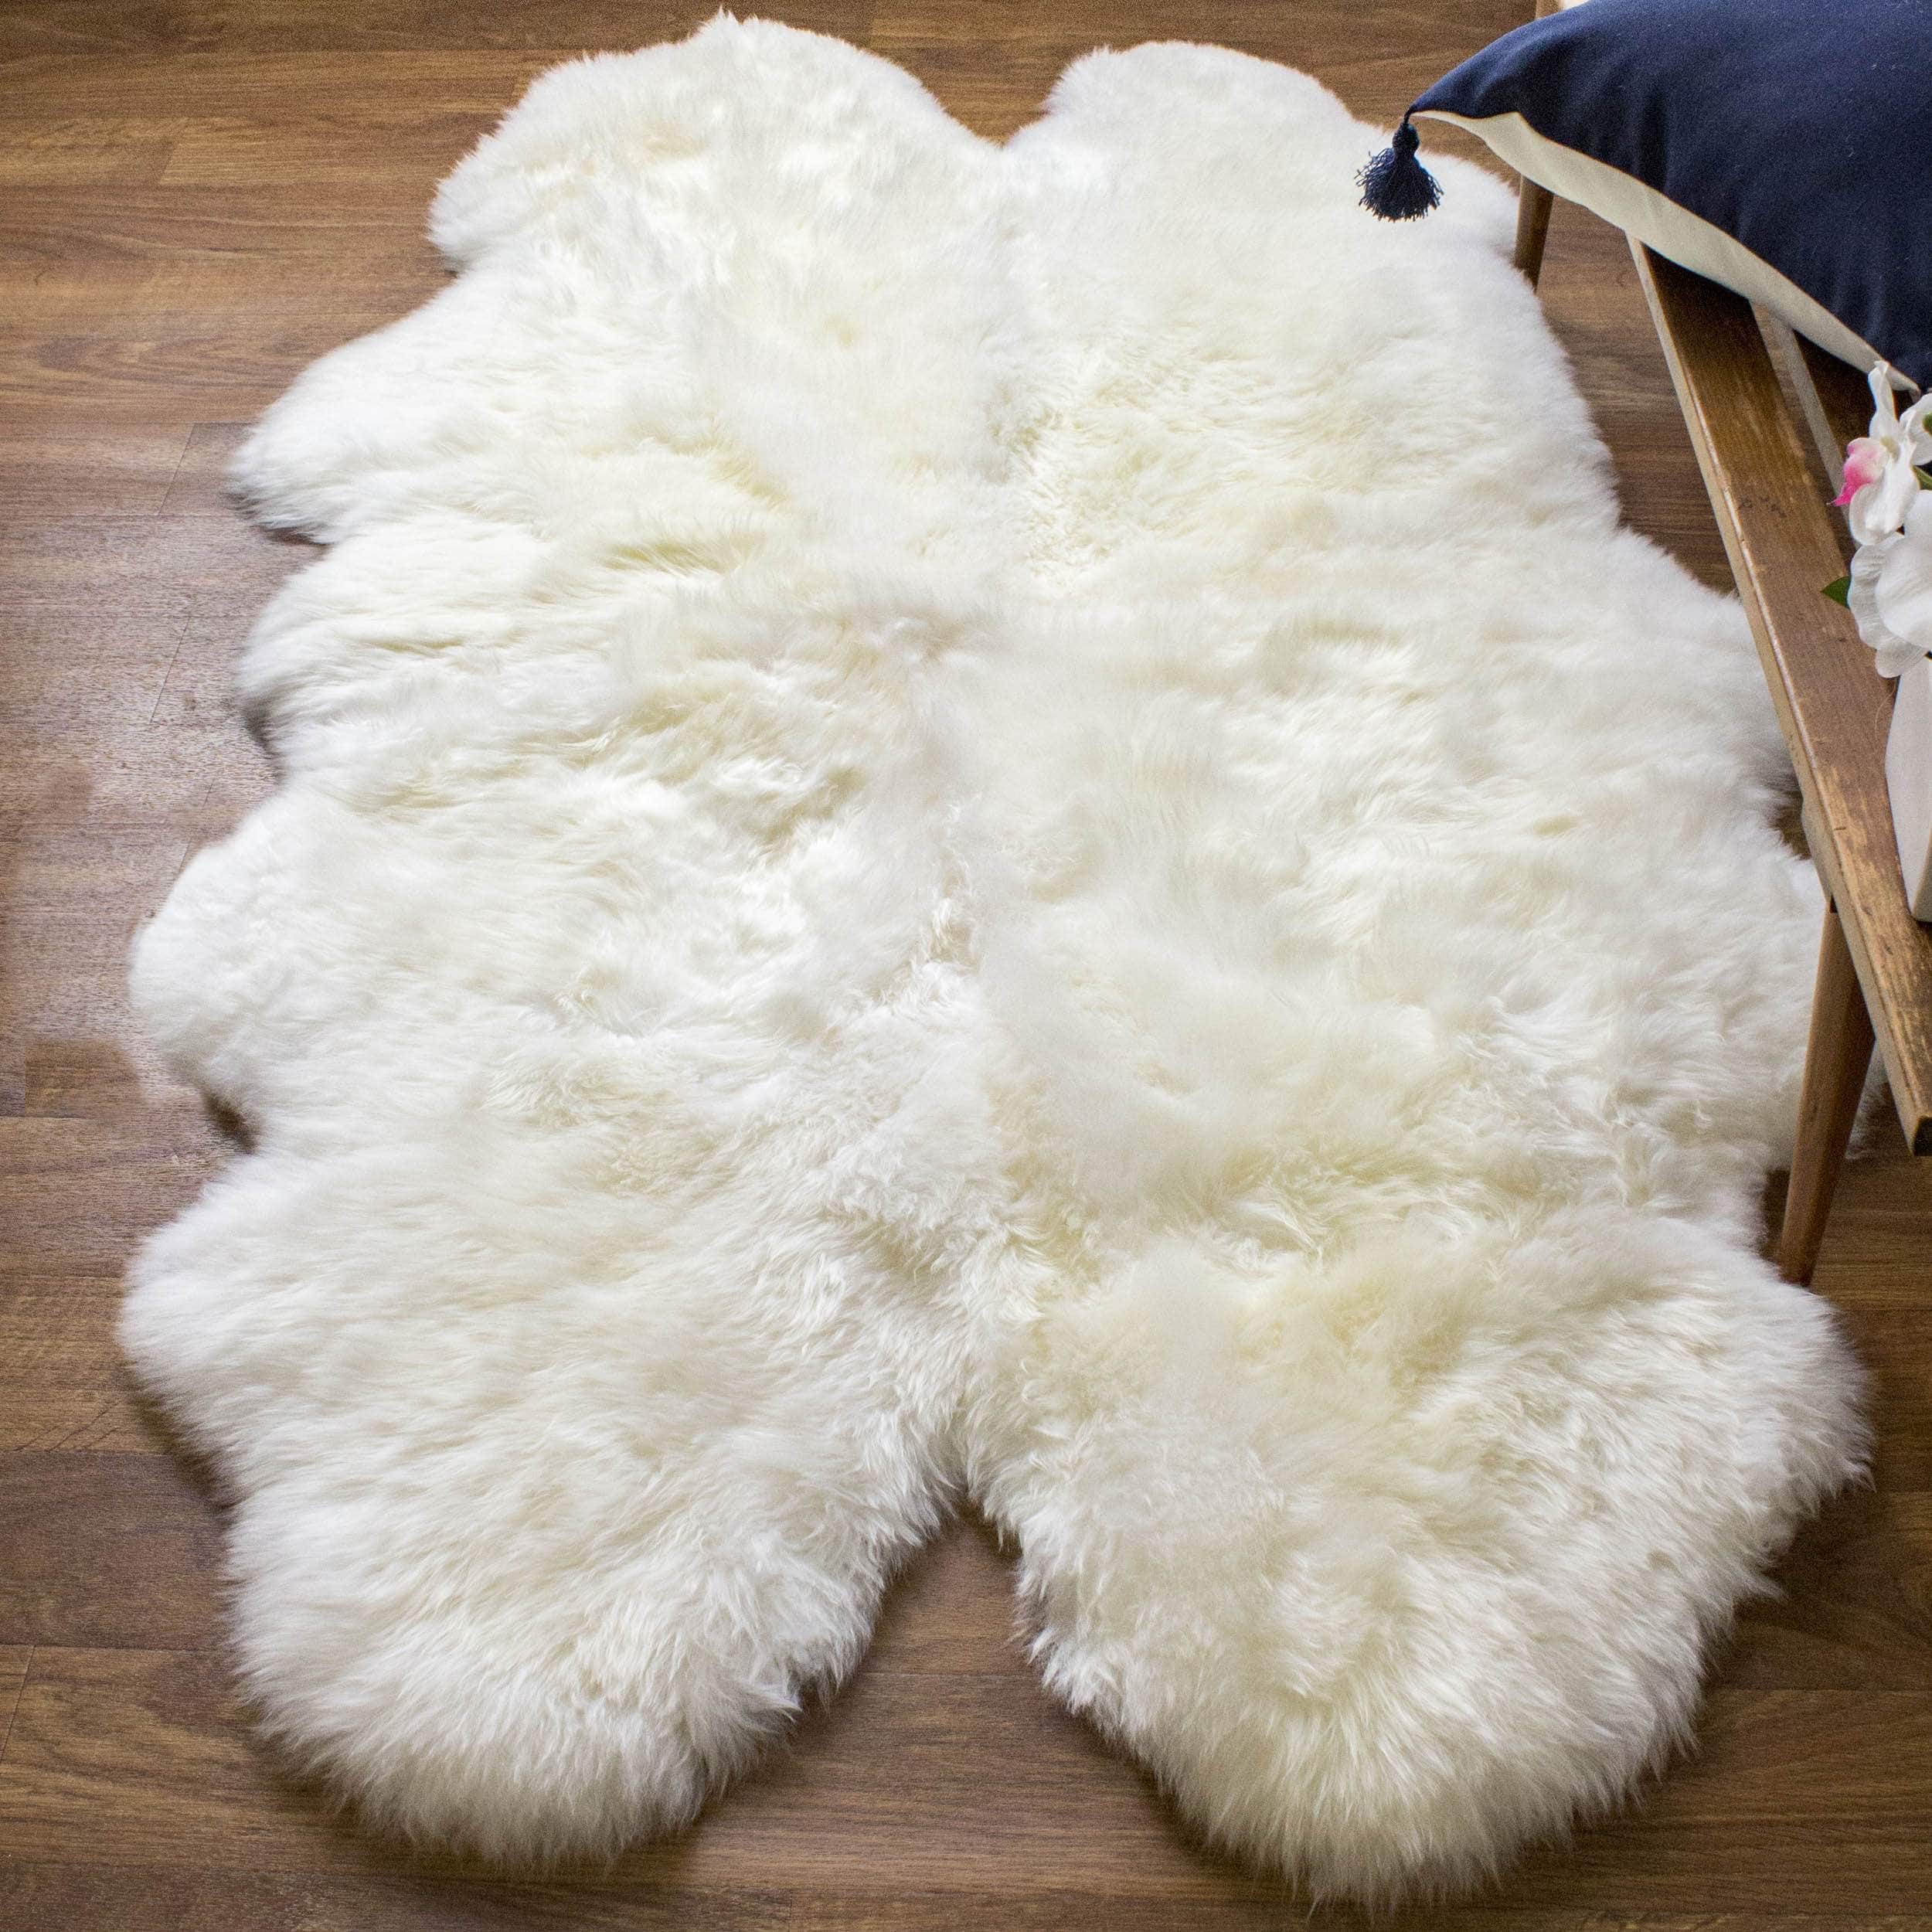 Natural Sheepskin Rug Shearling Fur Pelt #size_4' x 6'